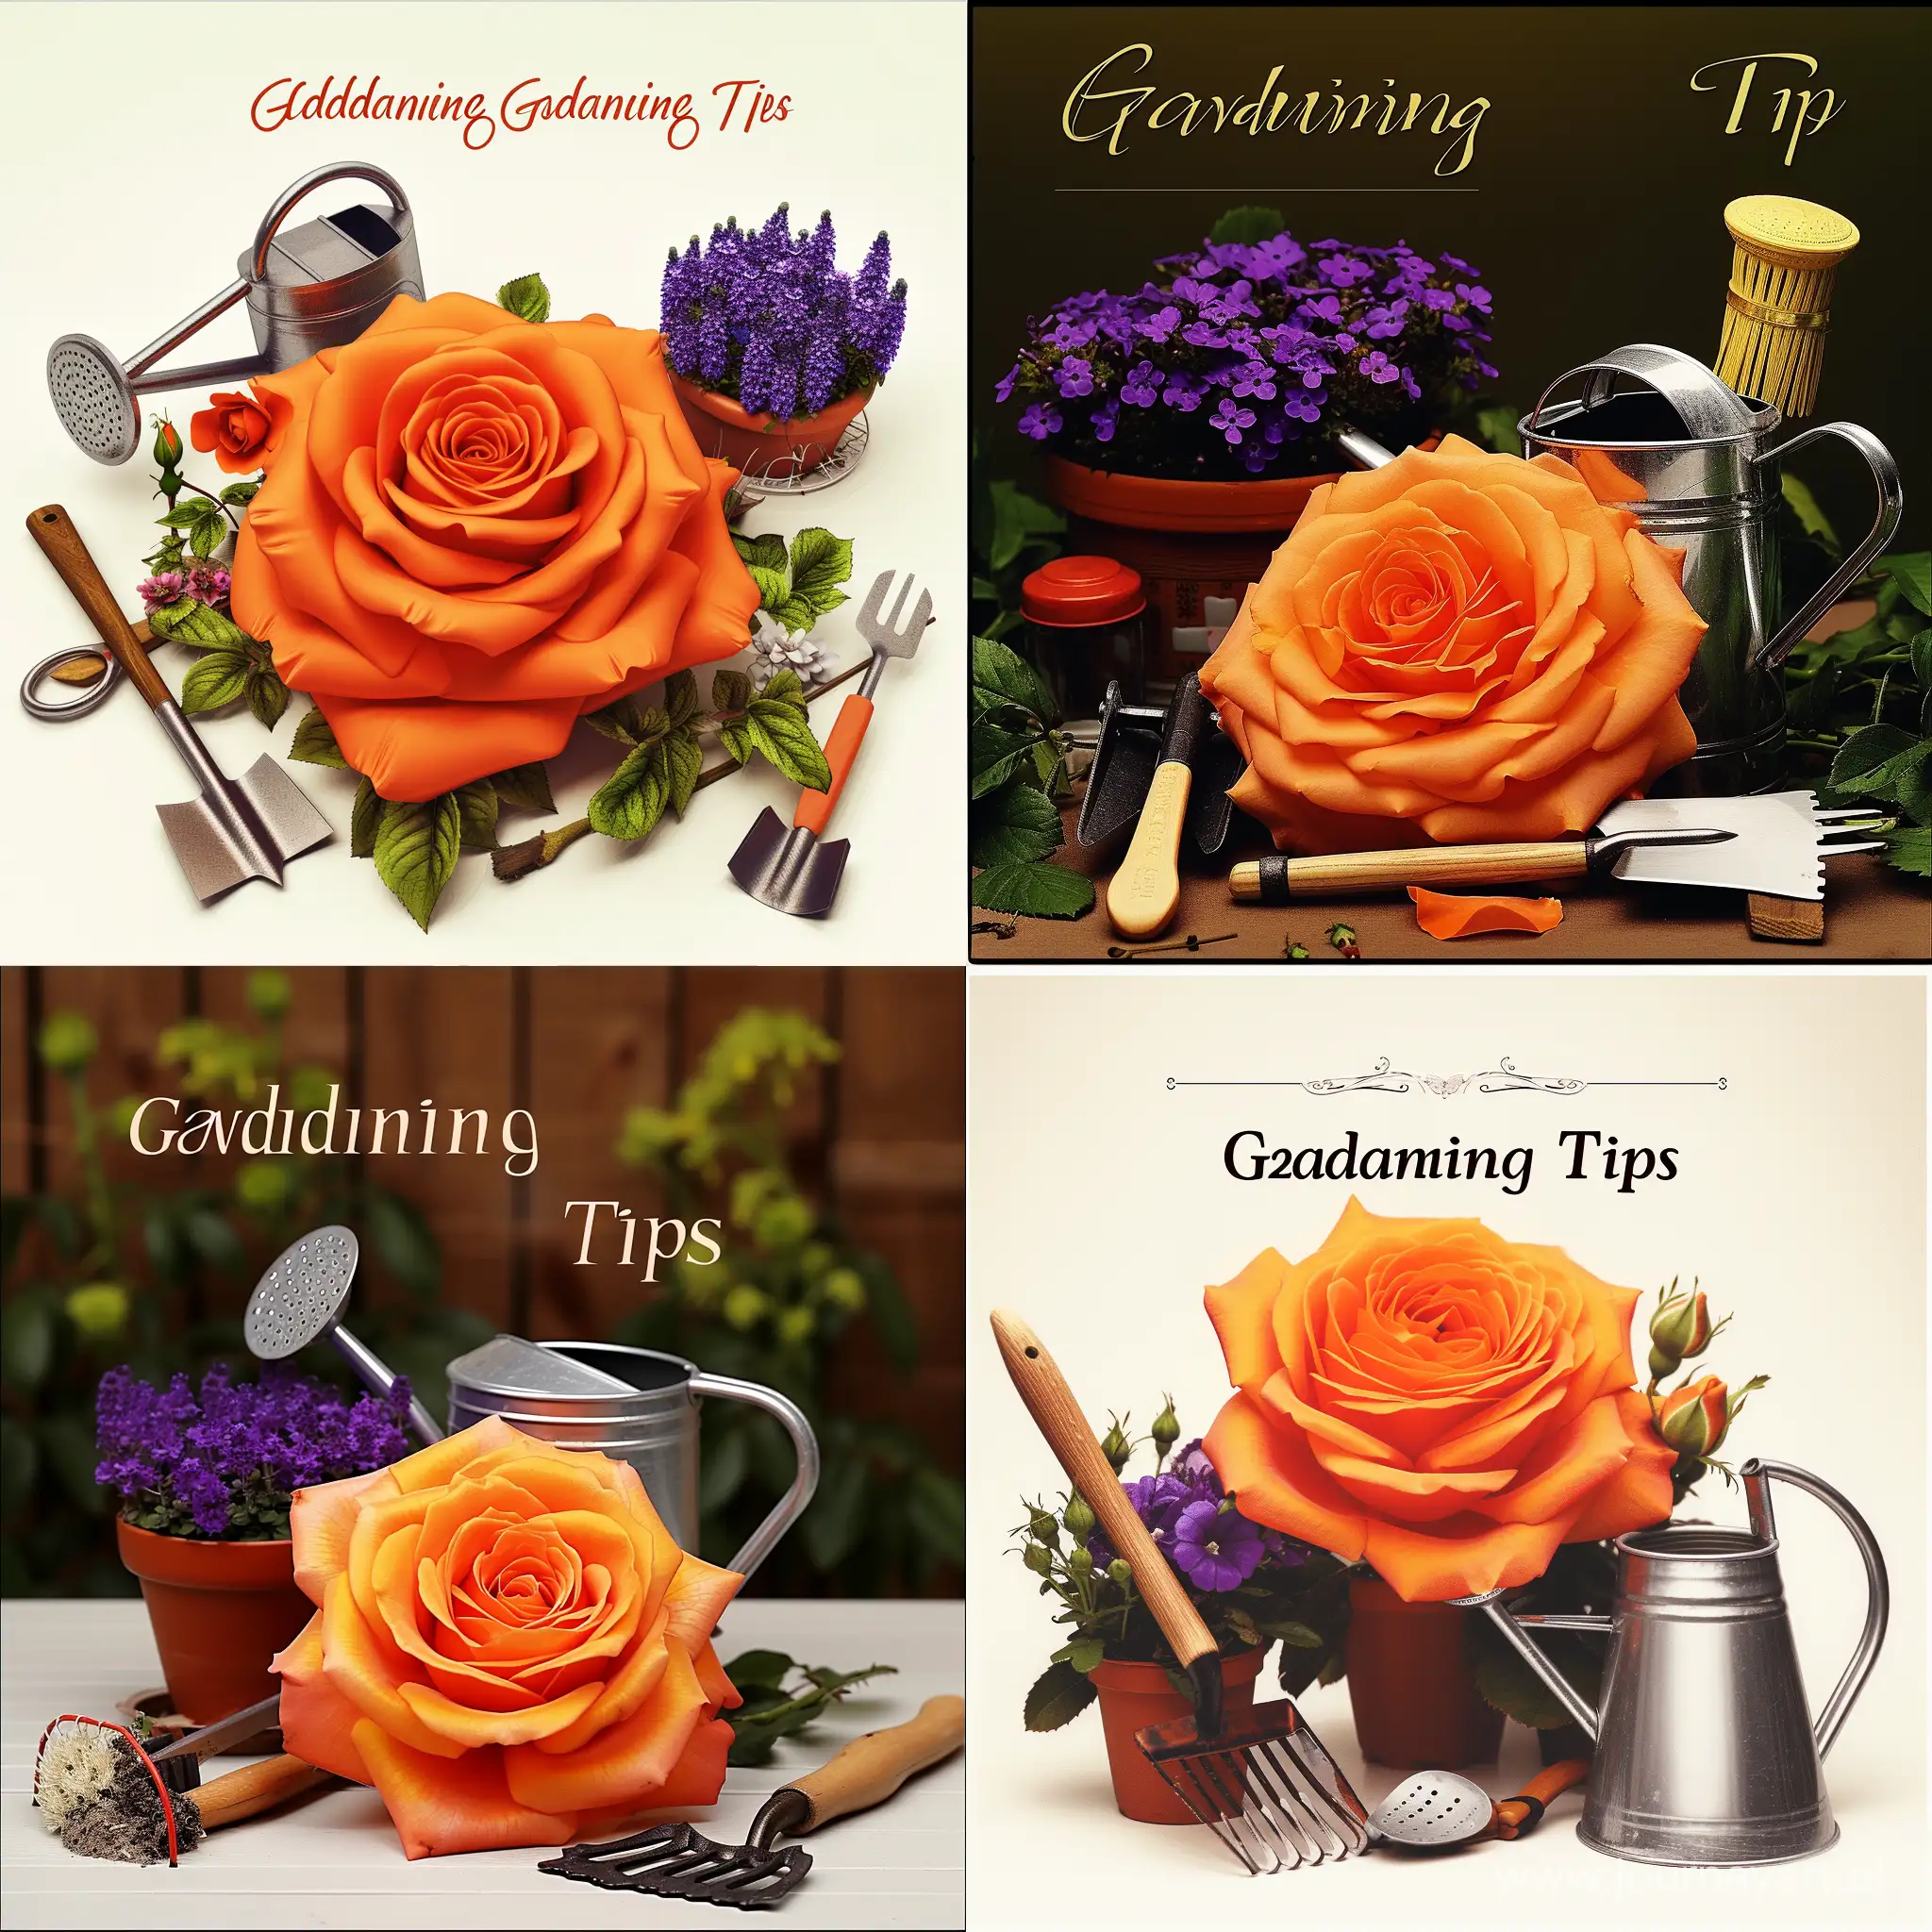 Vibrant-Orange-Rose-and-Gardening-Essentials-with-Gardening-Tips